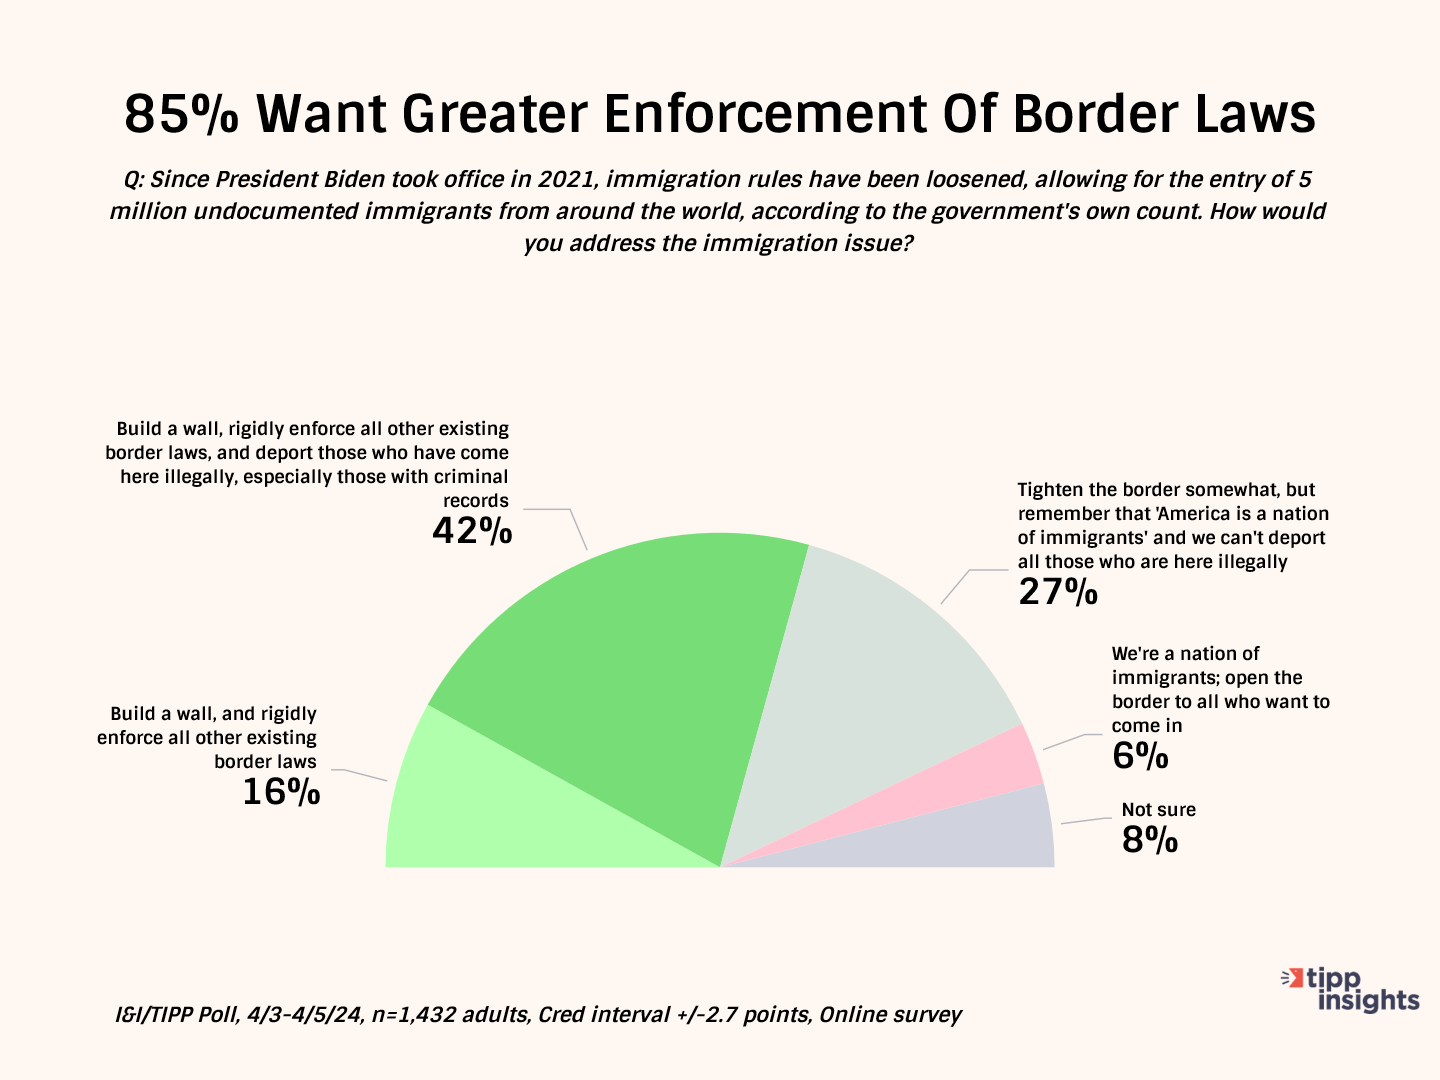 Majority Of Voters (Still) Back Border Wall, Stiff Immigration Controls: I&I/TIPP Poll